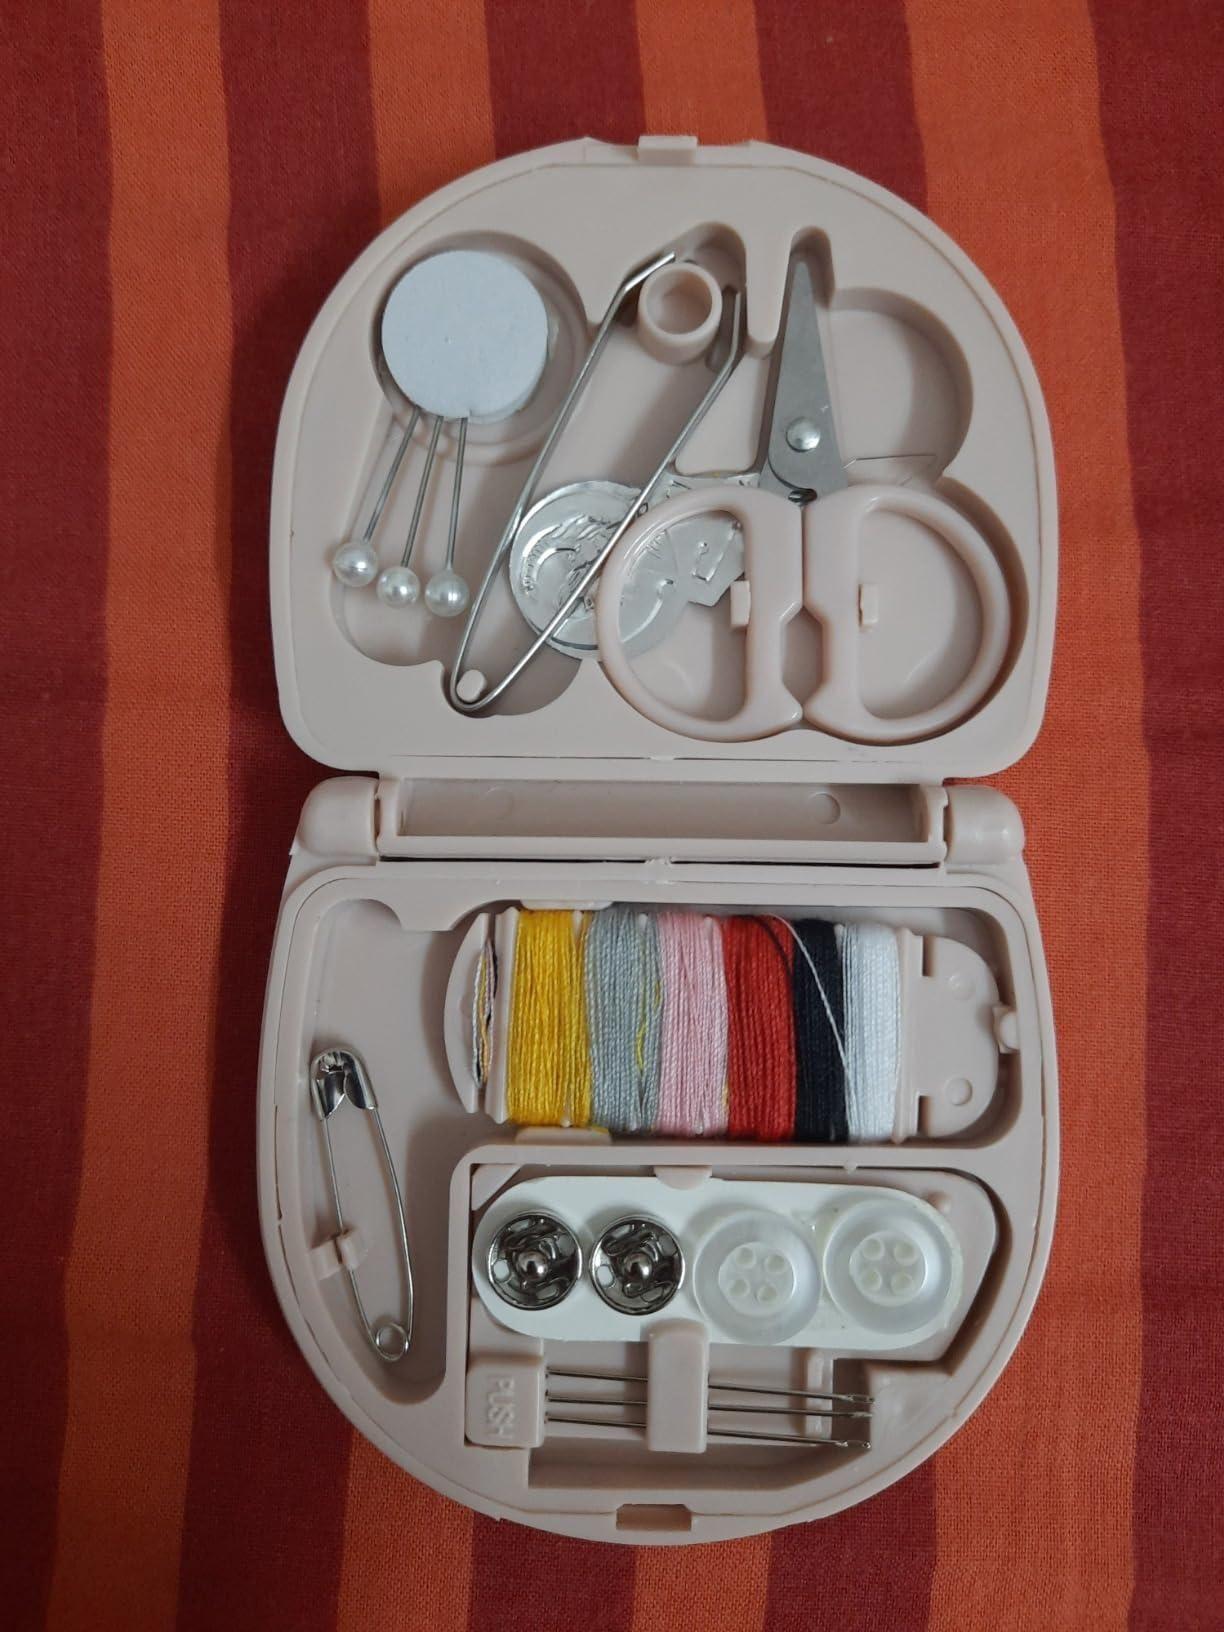 Mini Sewing Box Pocket Folding Sewing Kit